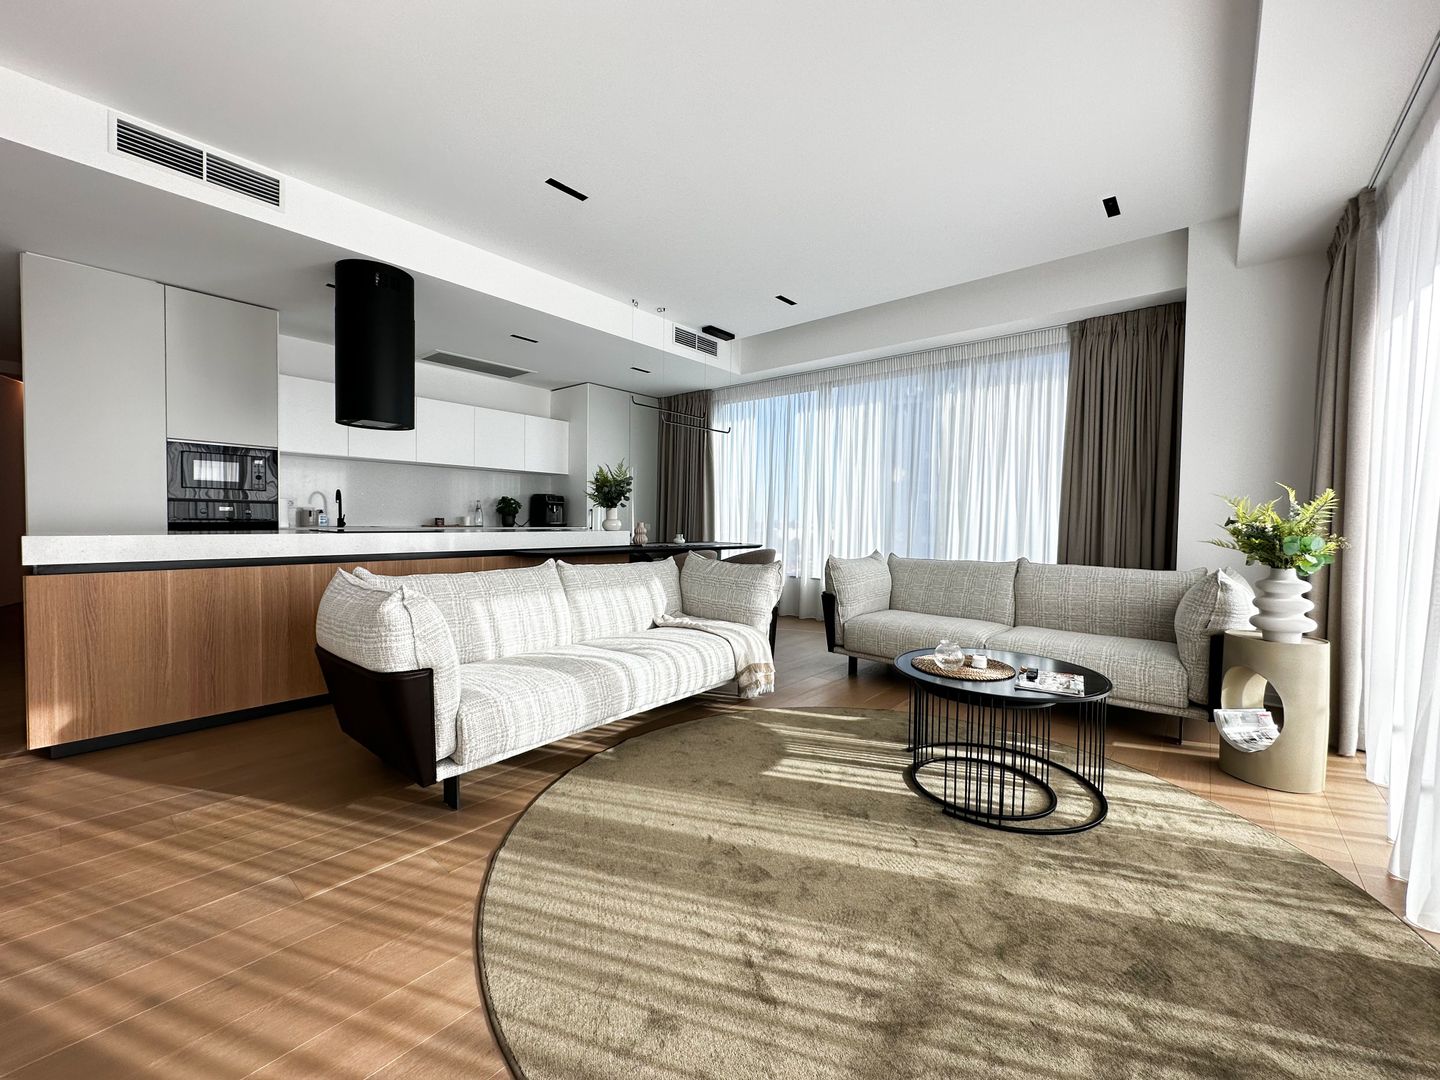 4-room ultralux Mircea Eliade apartment for rent